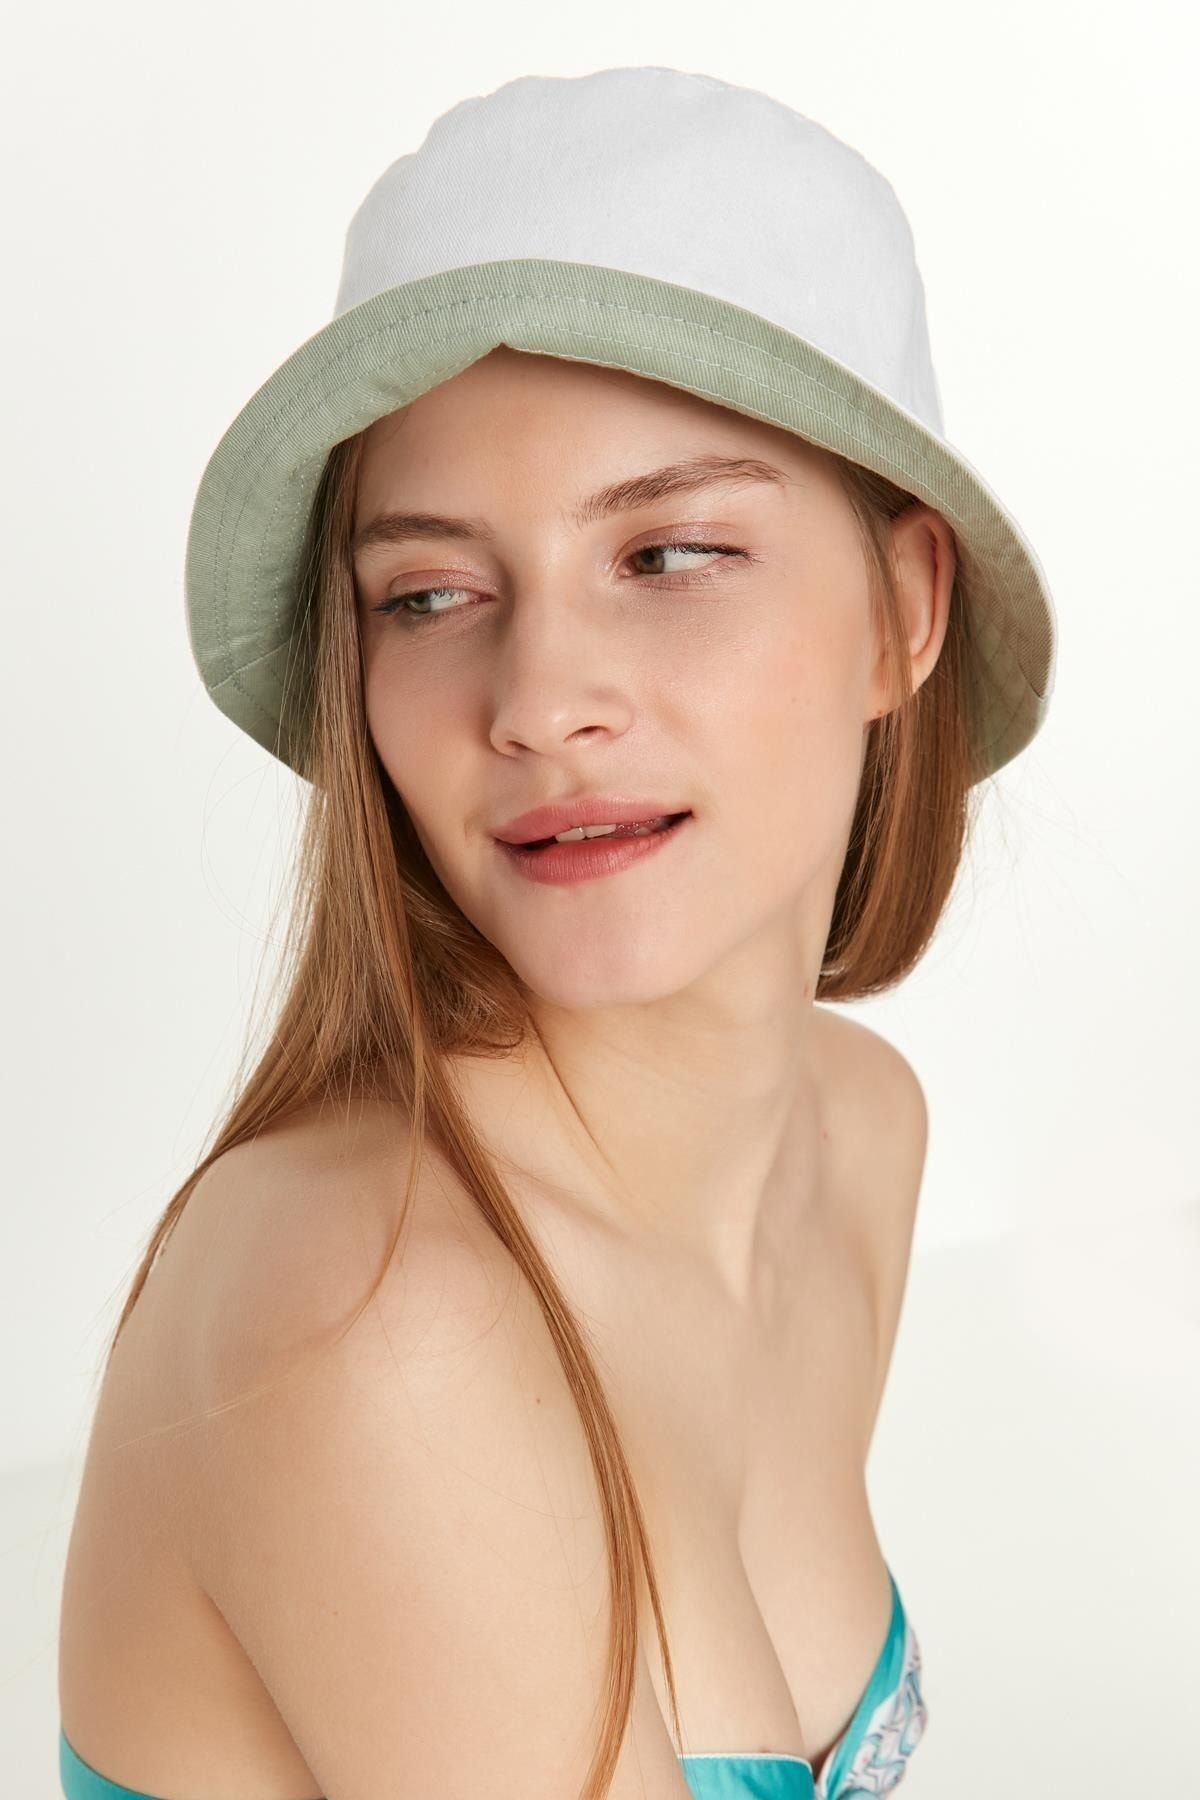 Axesoire 13614 Çift Taraflı Mint Yeşil Beyaz Tas Şapka